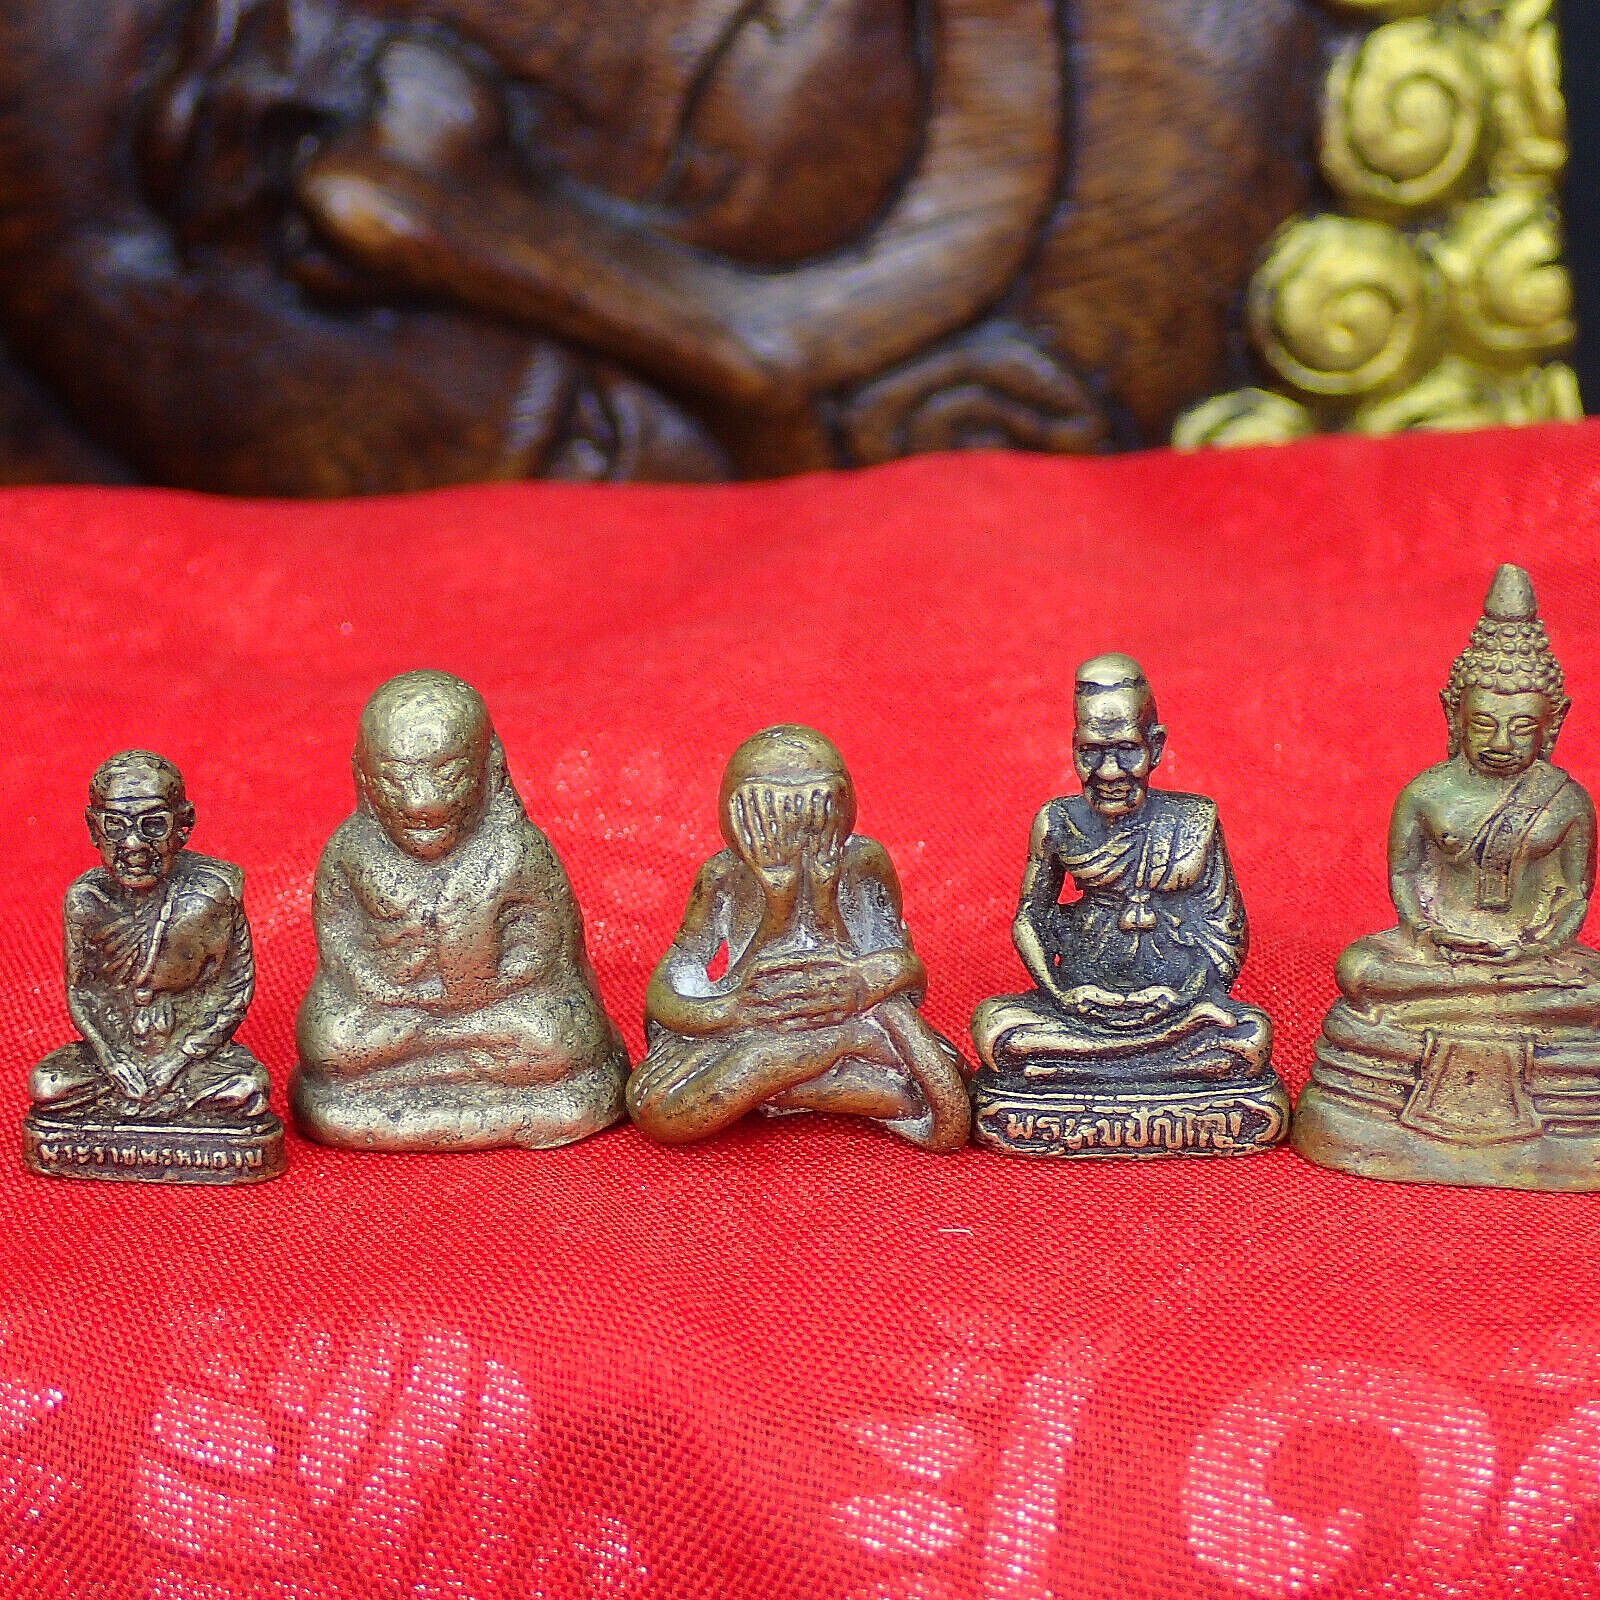 Phra Buddha Sothorn Lp Ngern Guru Monk Collectible Statues Buddhism Thai amulet